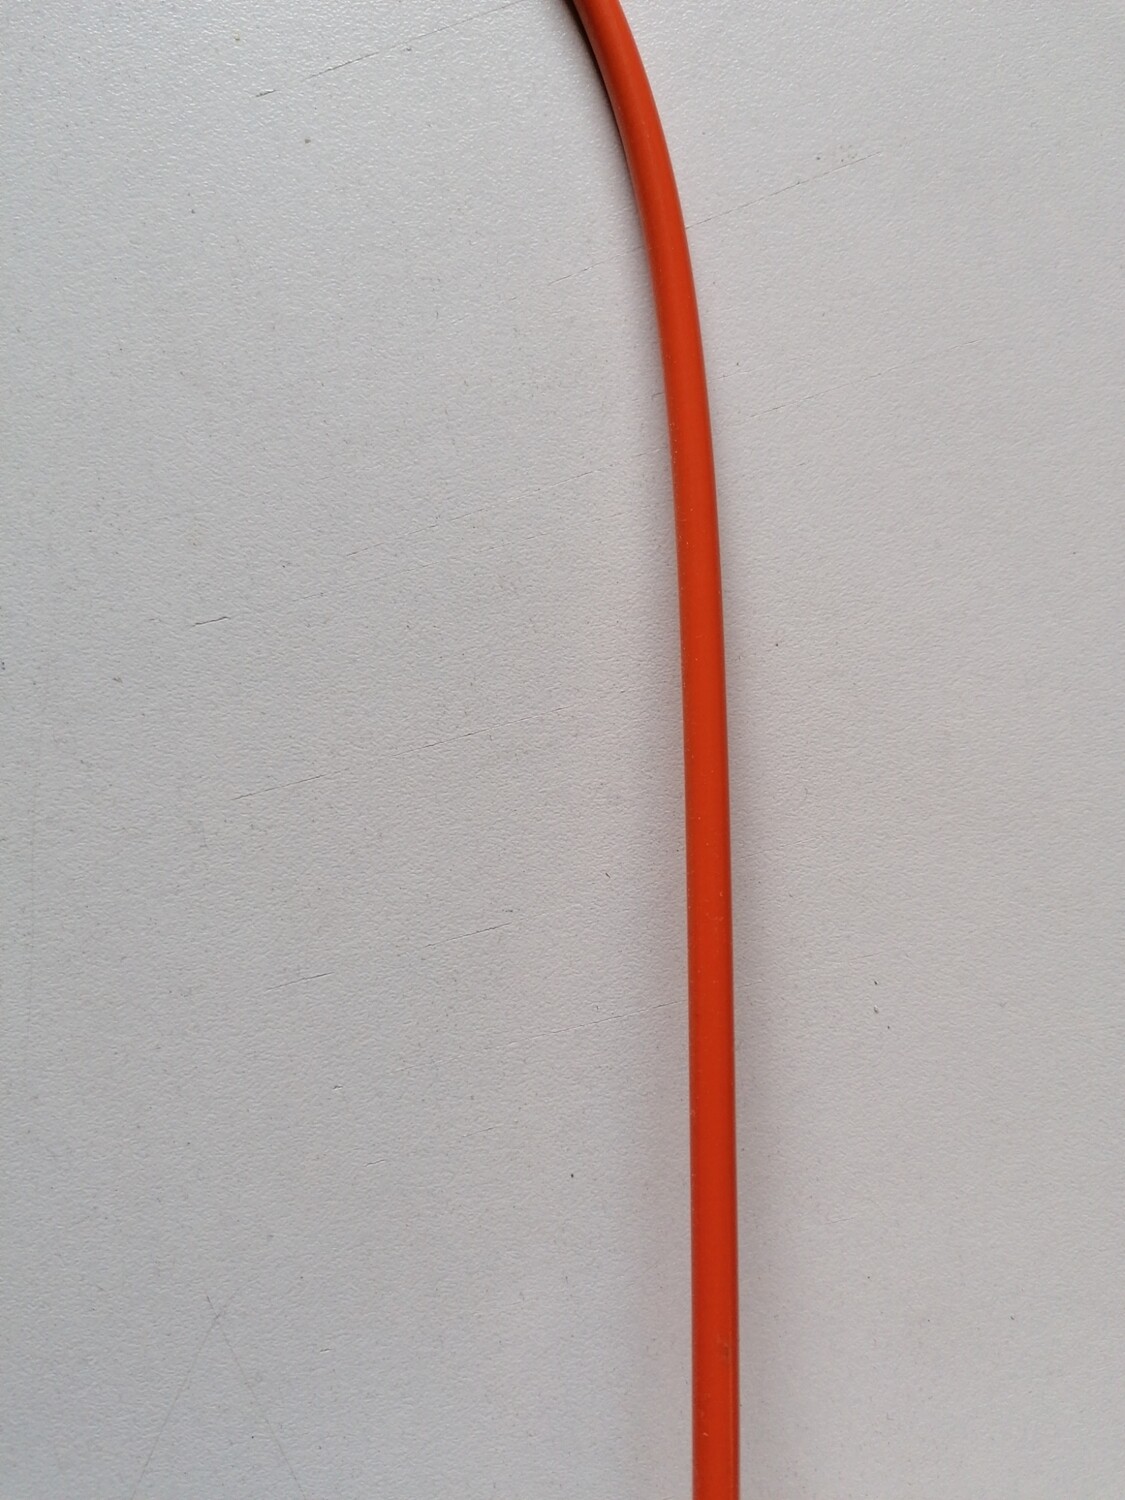 Buitenkabel oranje ( 1meter)